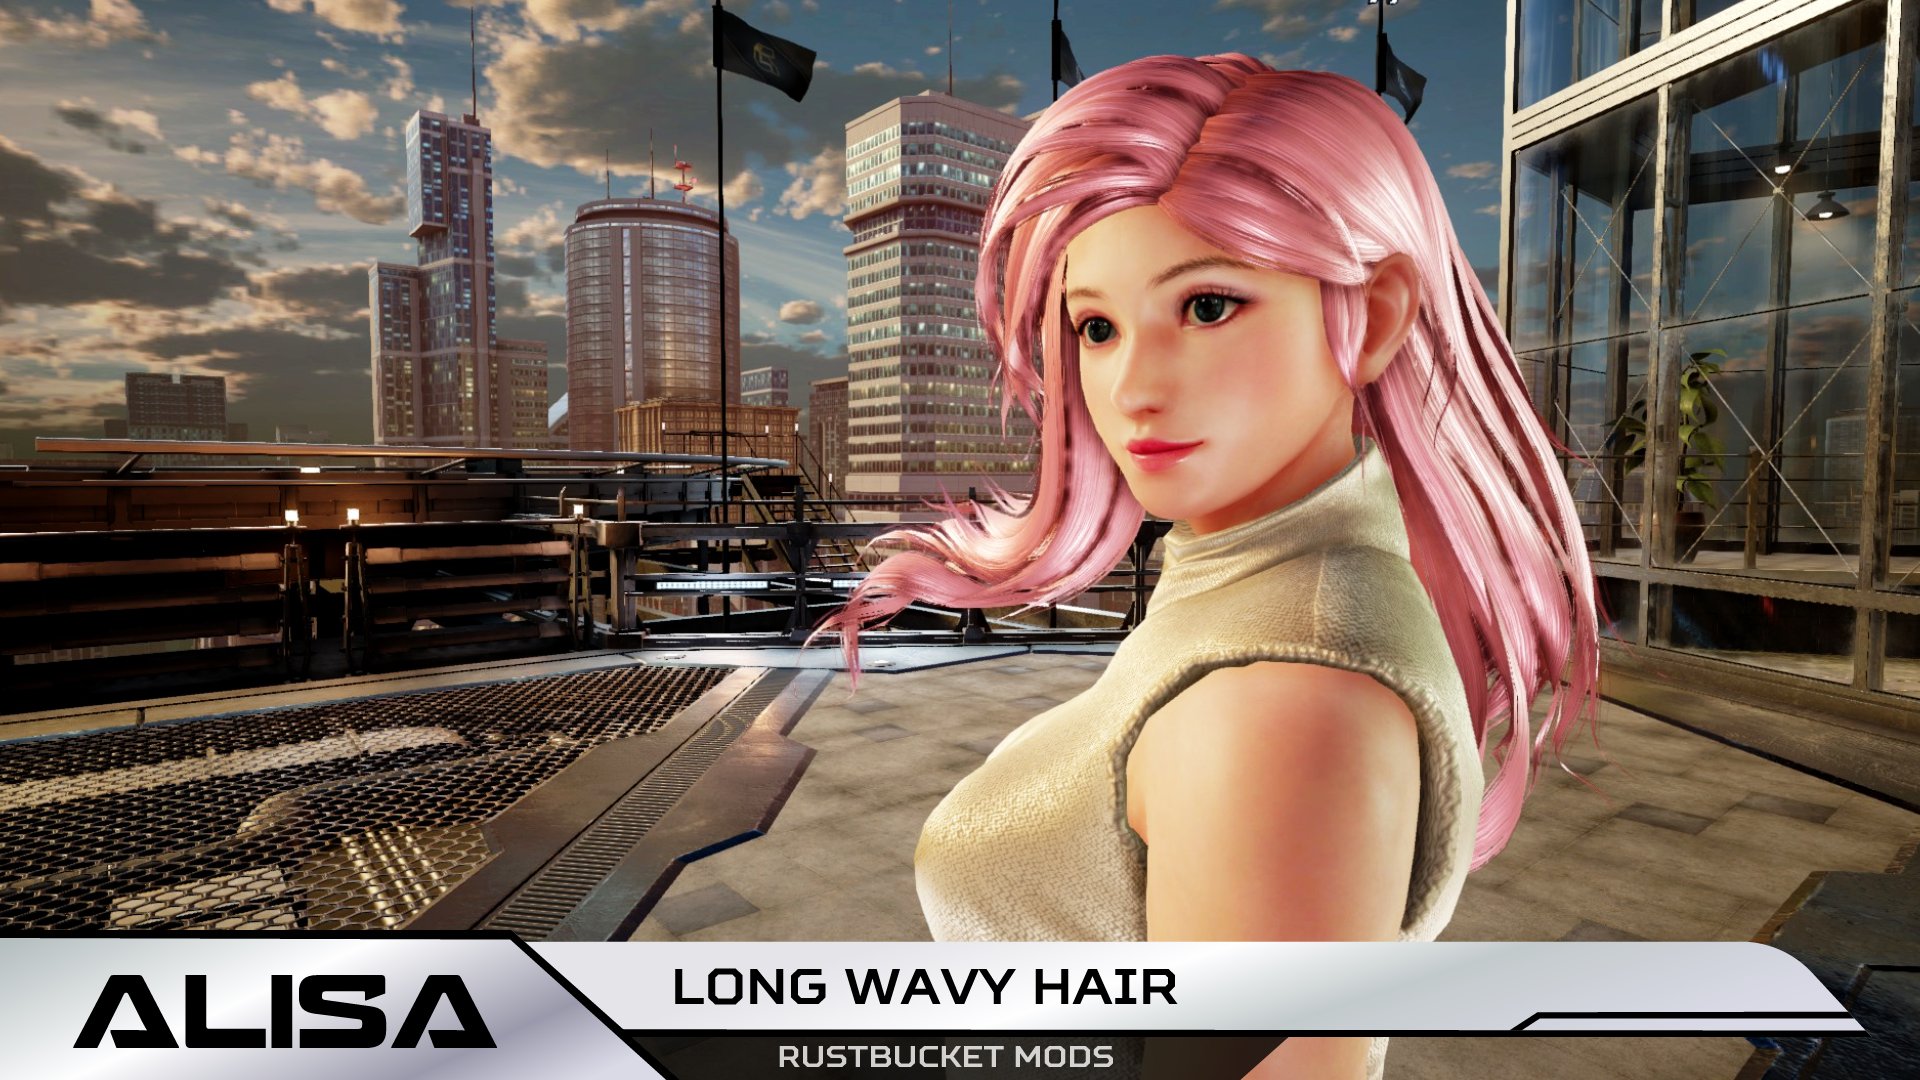 Long wavy hair for Alisa